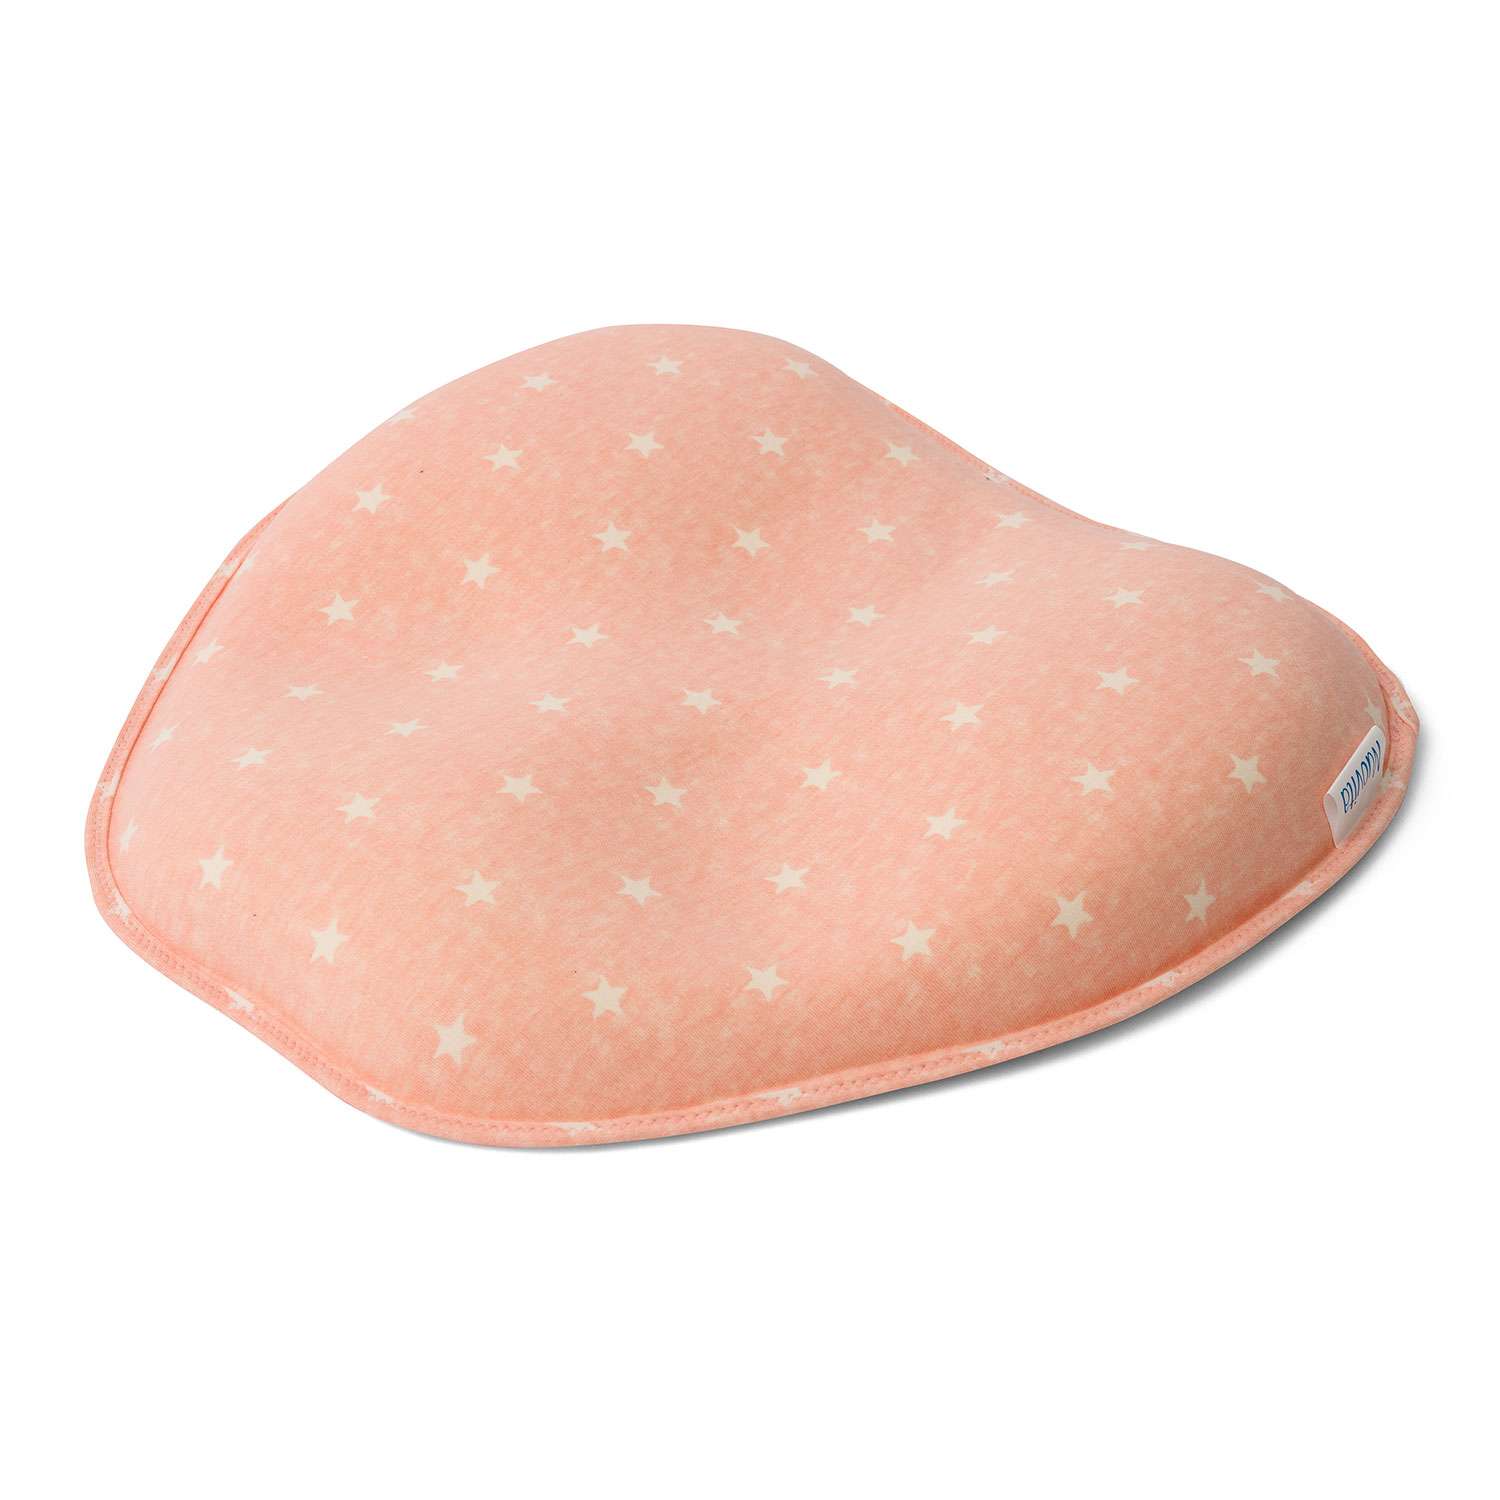 Подушка для новорожденного Nuovita Neonutti Trio Dipinto Звезды розовая - фото 16